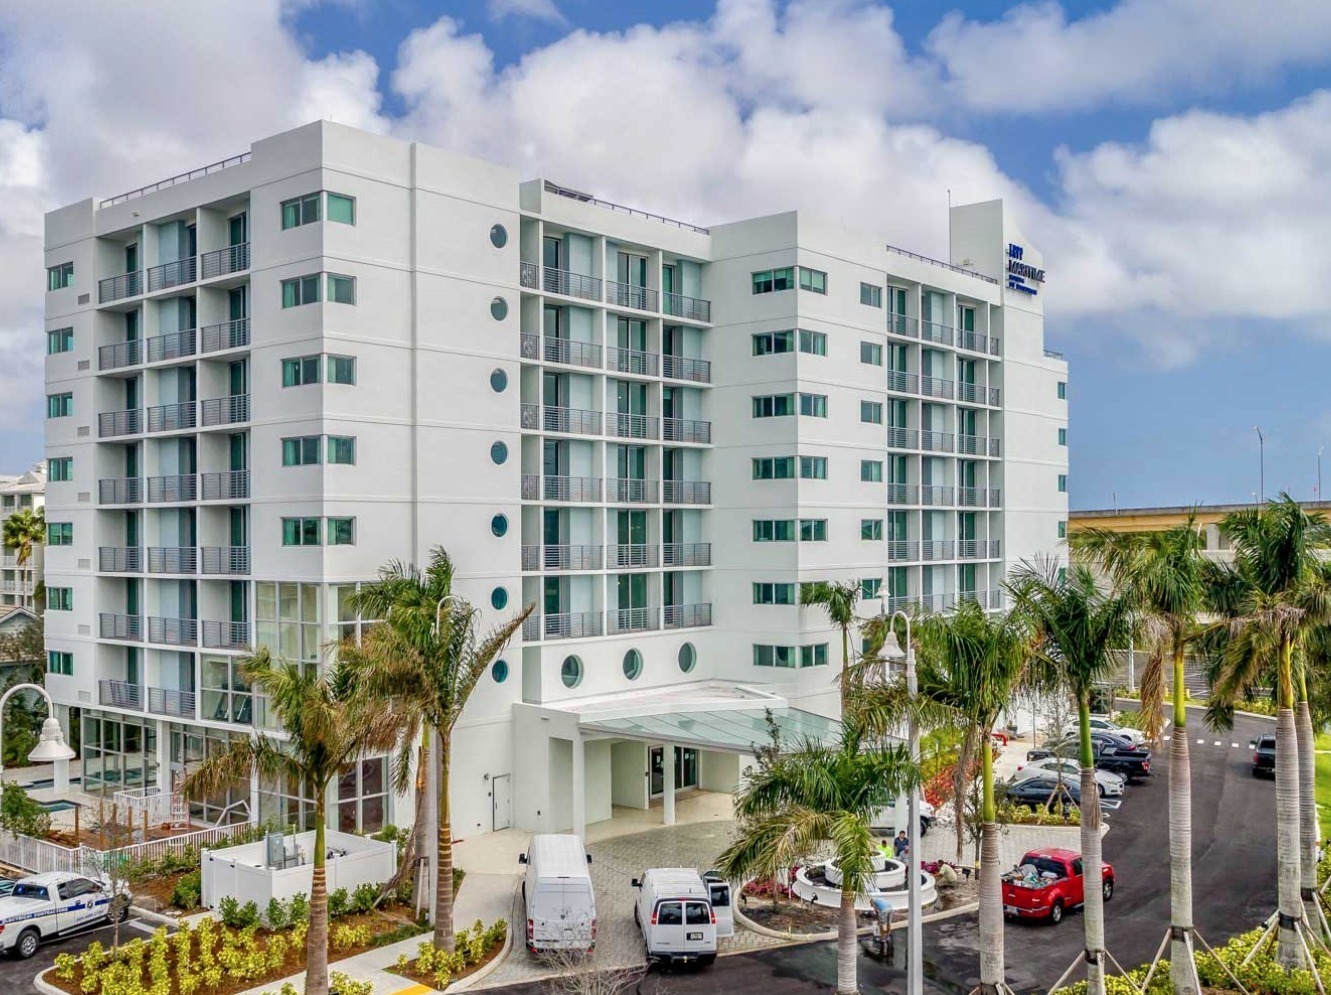 Photo of Maritime Hotel Fort Lauderdale, Fort Lauderdale, FL